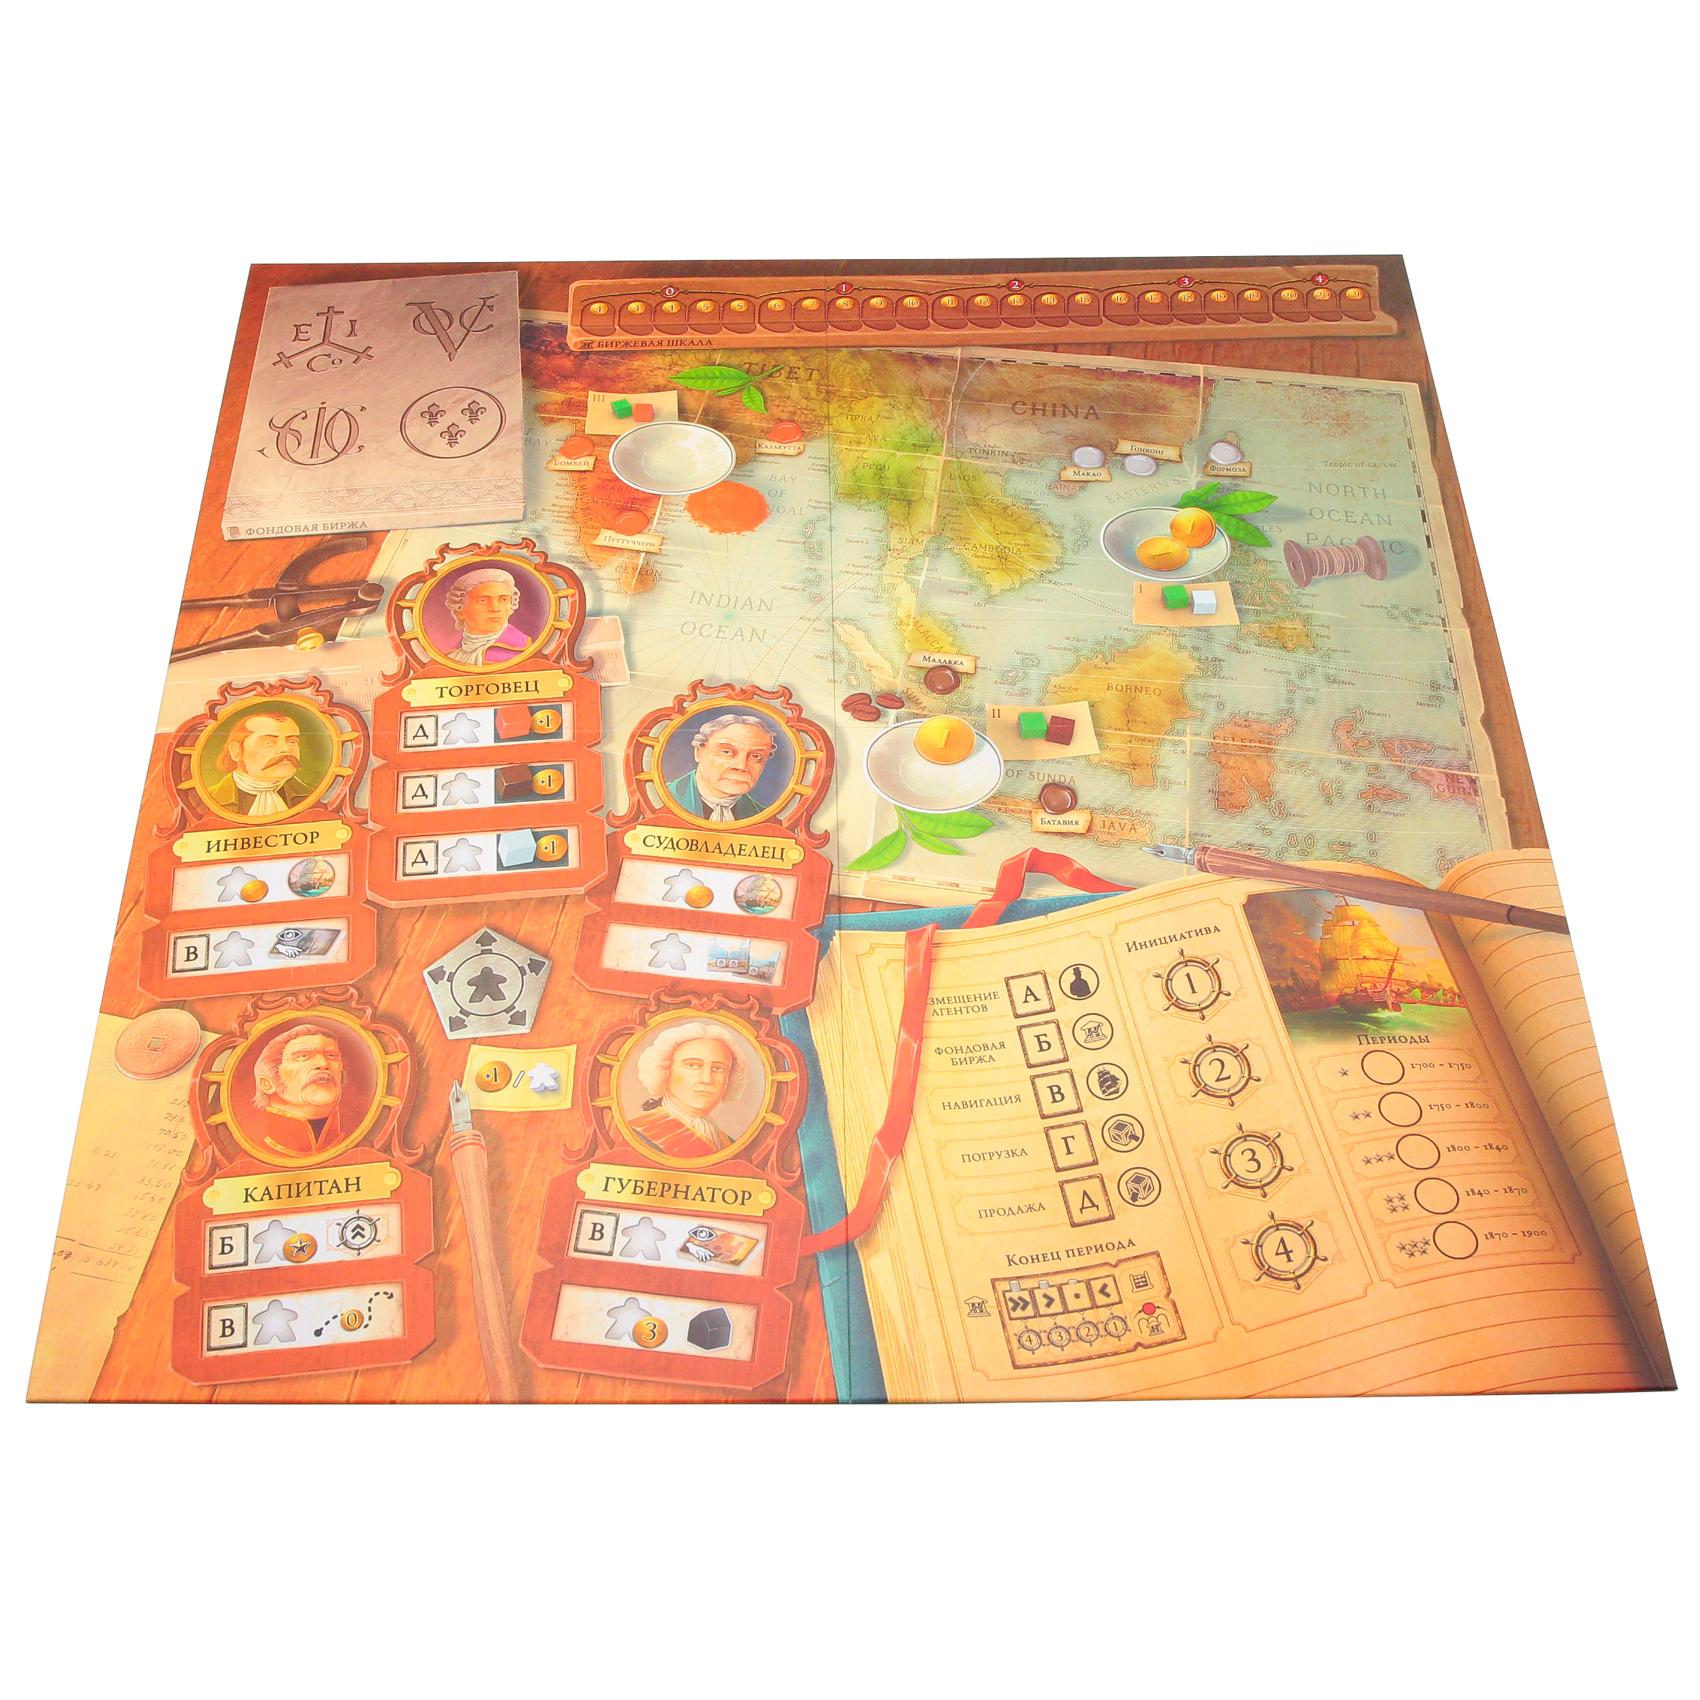 Galda spēle “The East India Company”